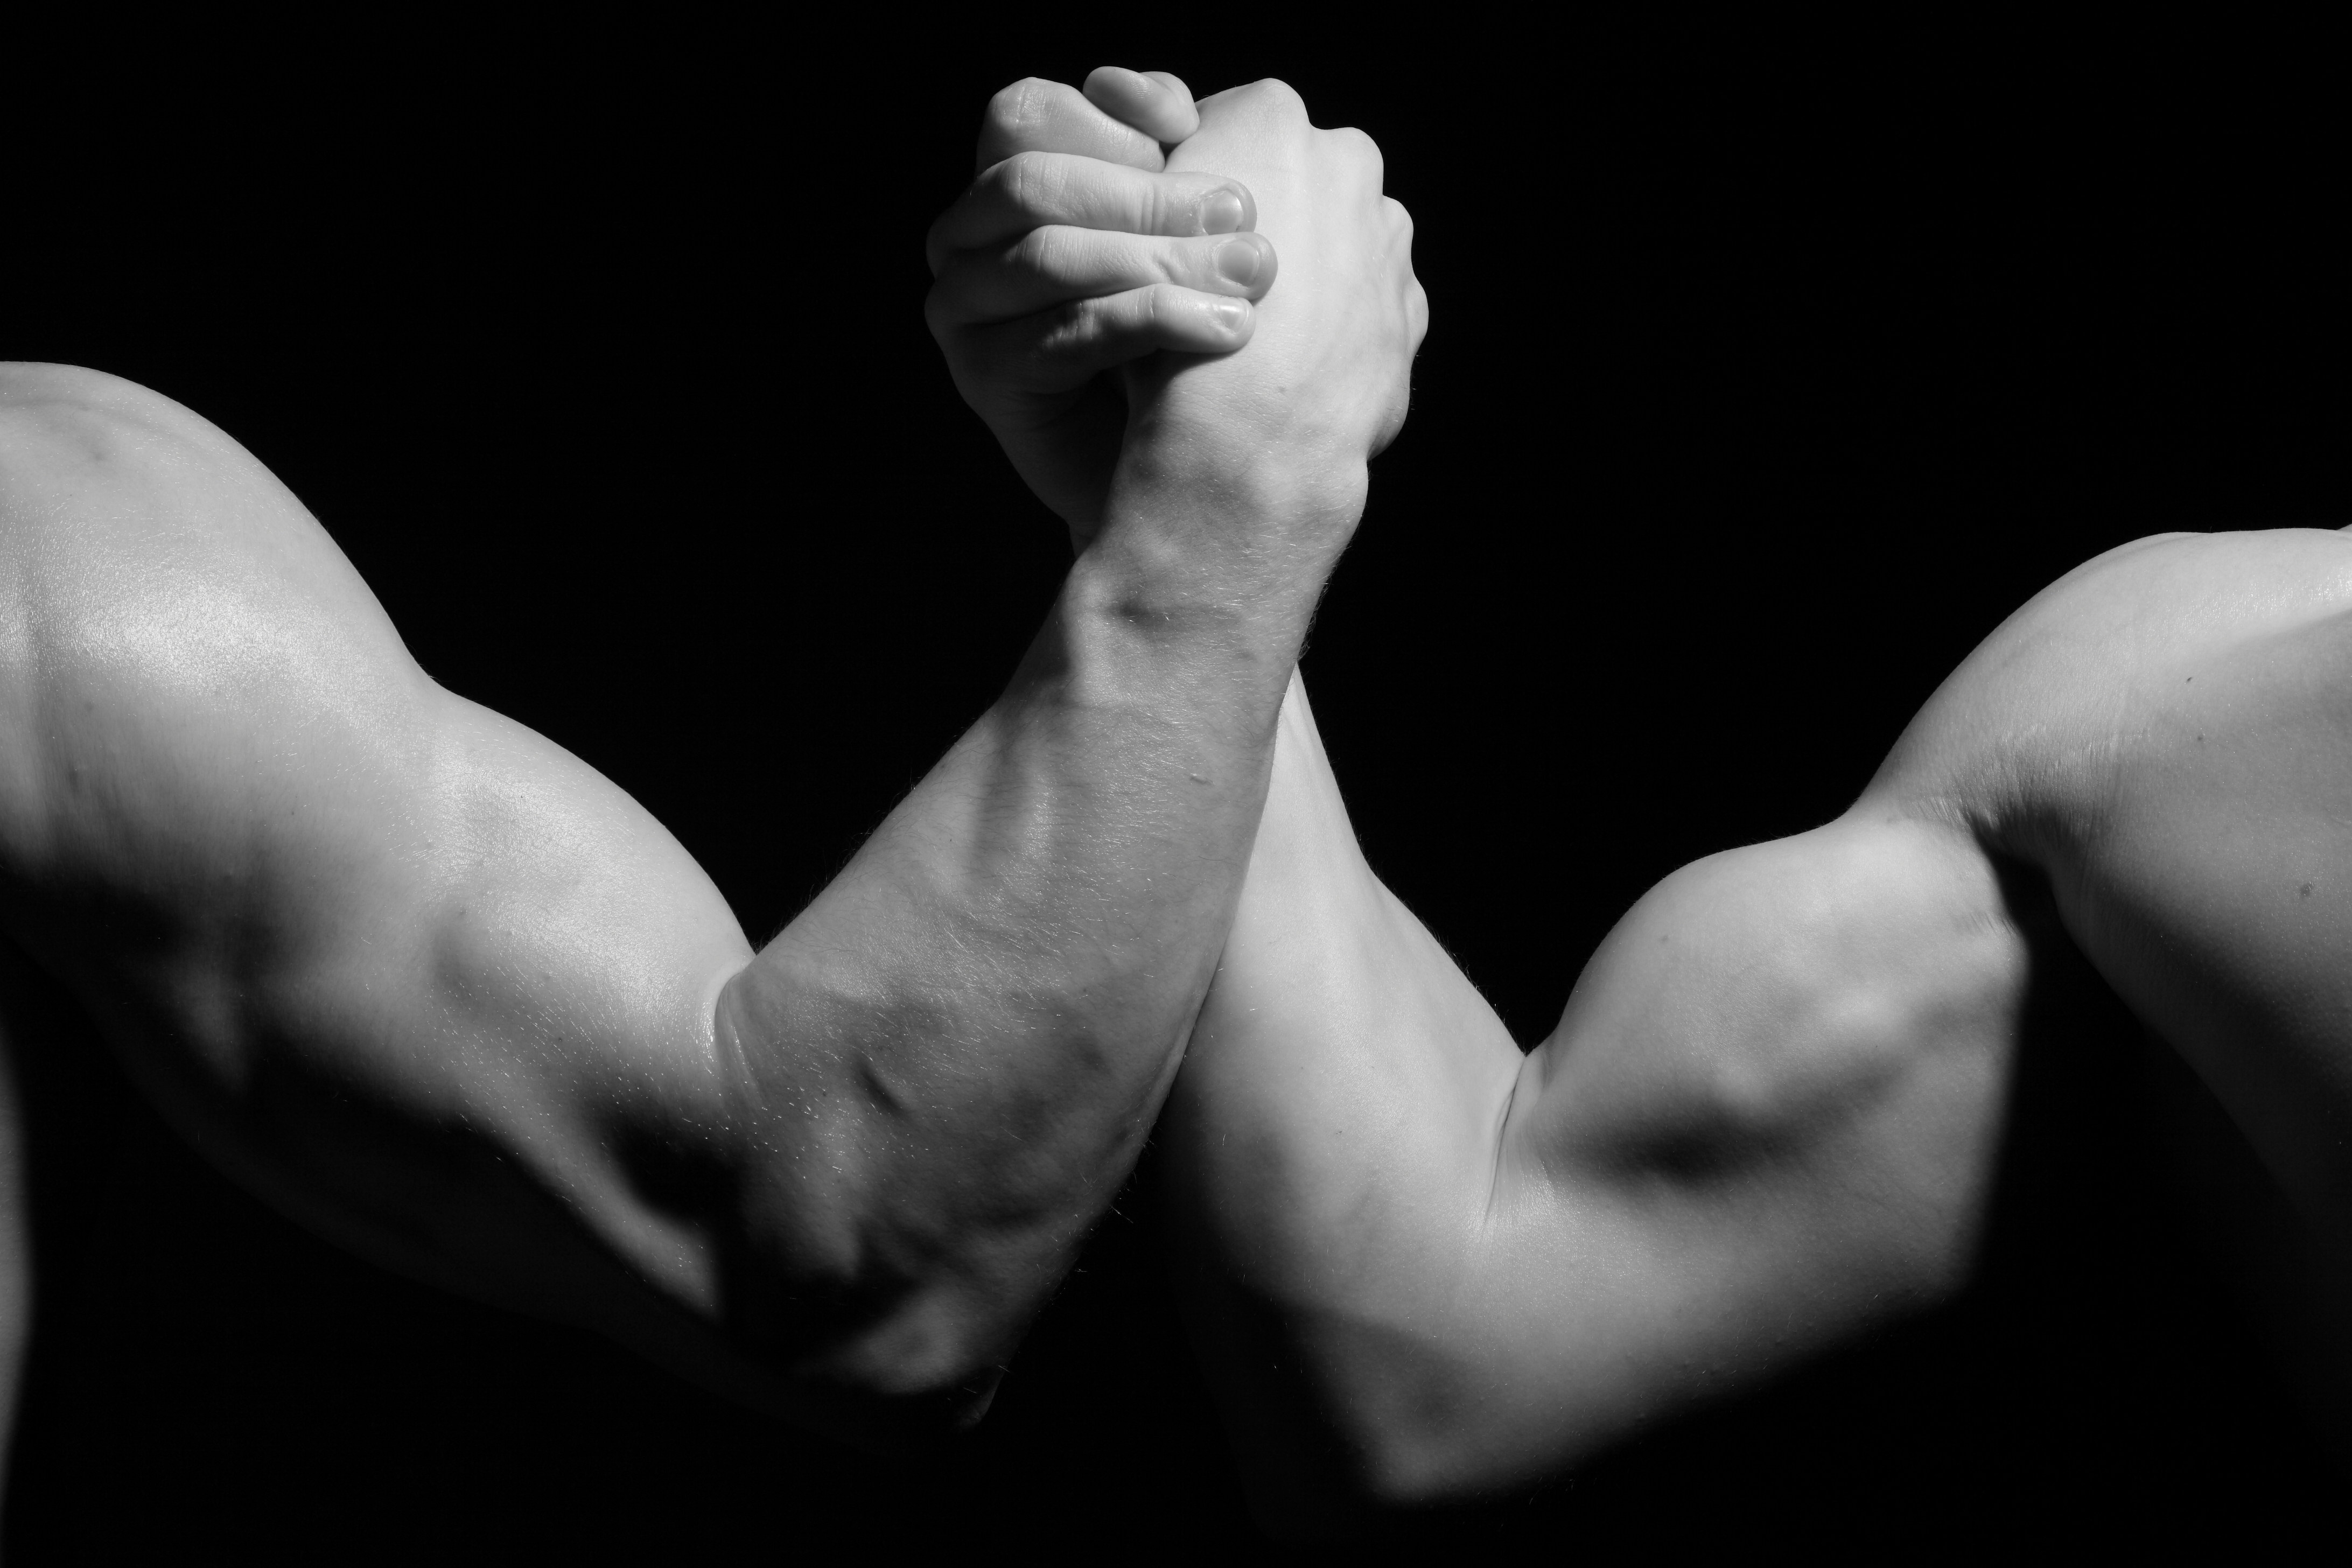 biceps, men, sports, hands, fight, black and white, struggle, arm wrestling